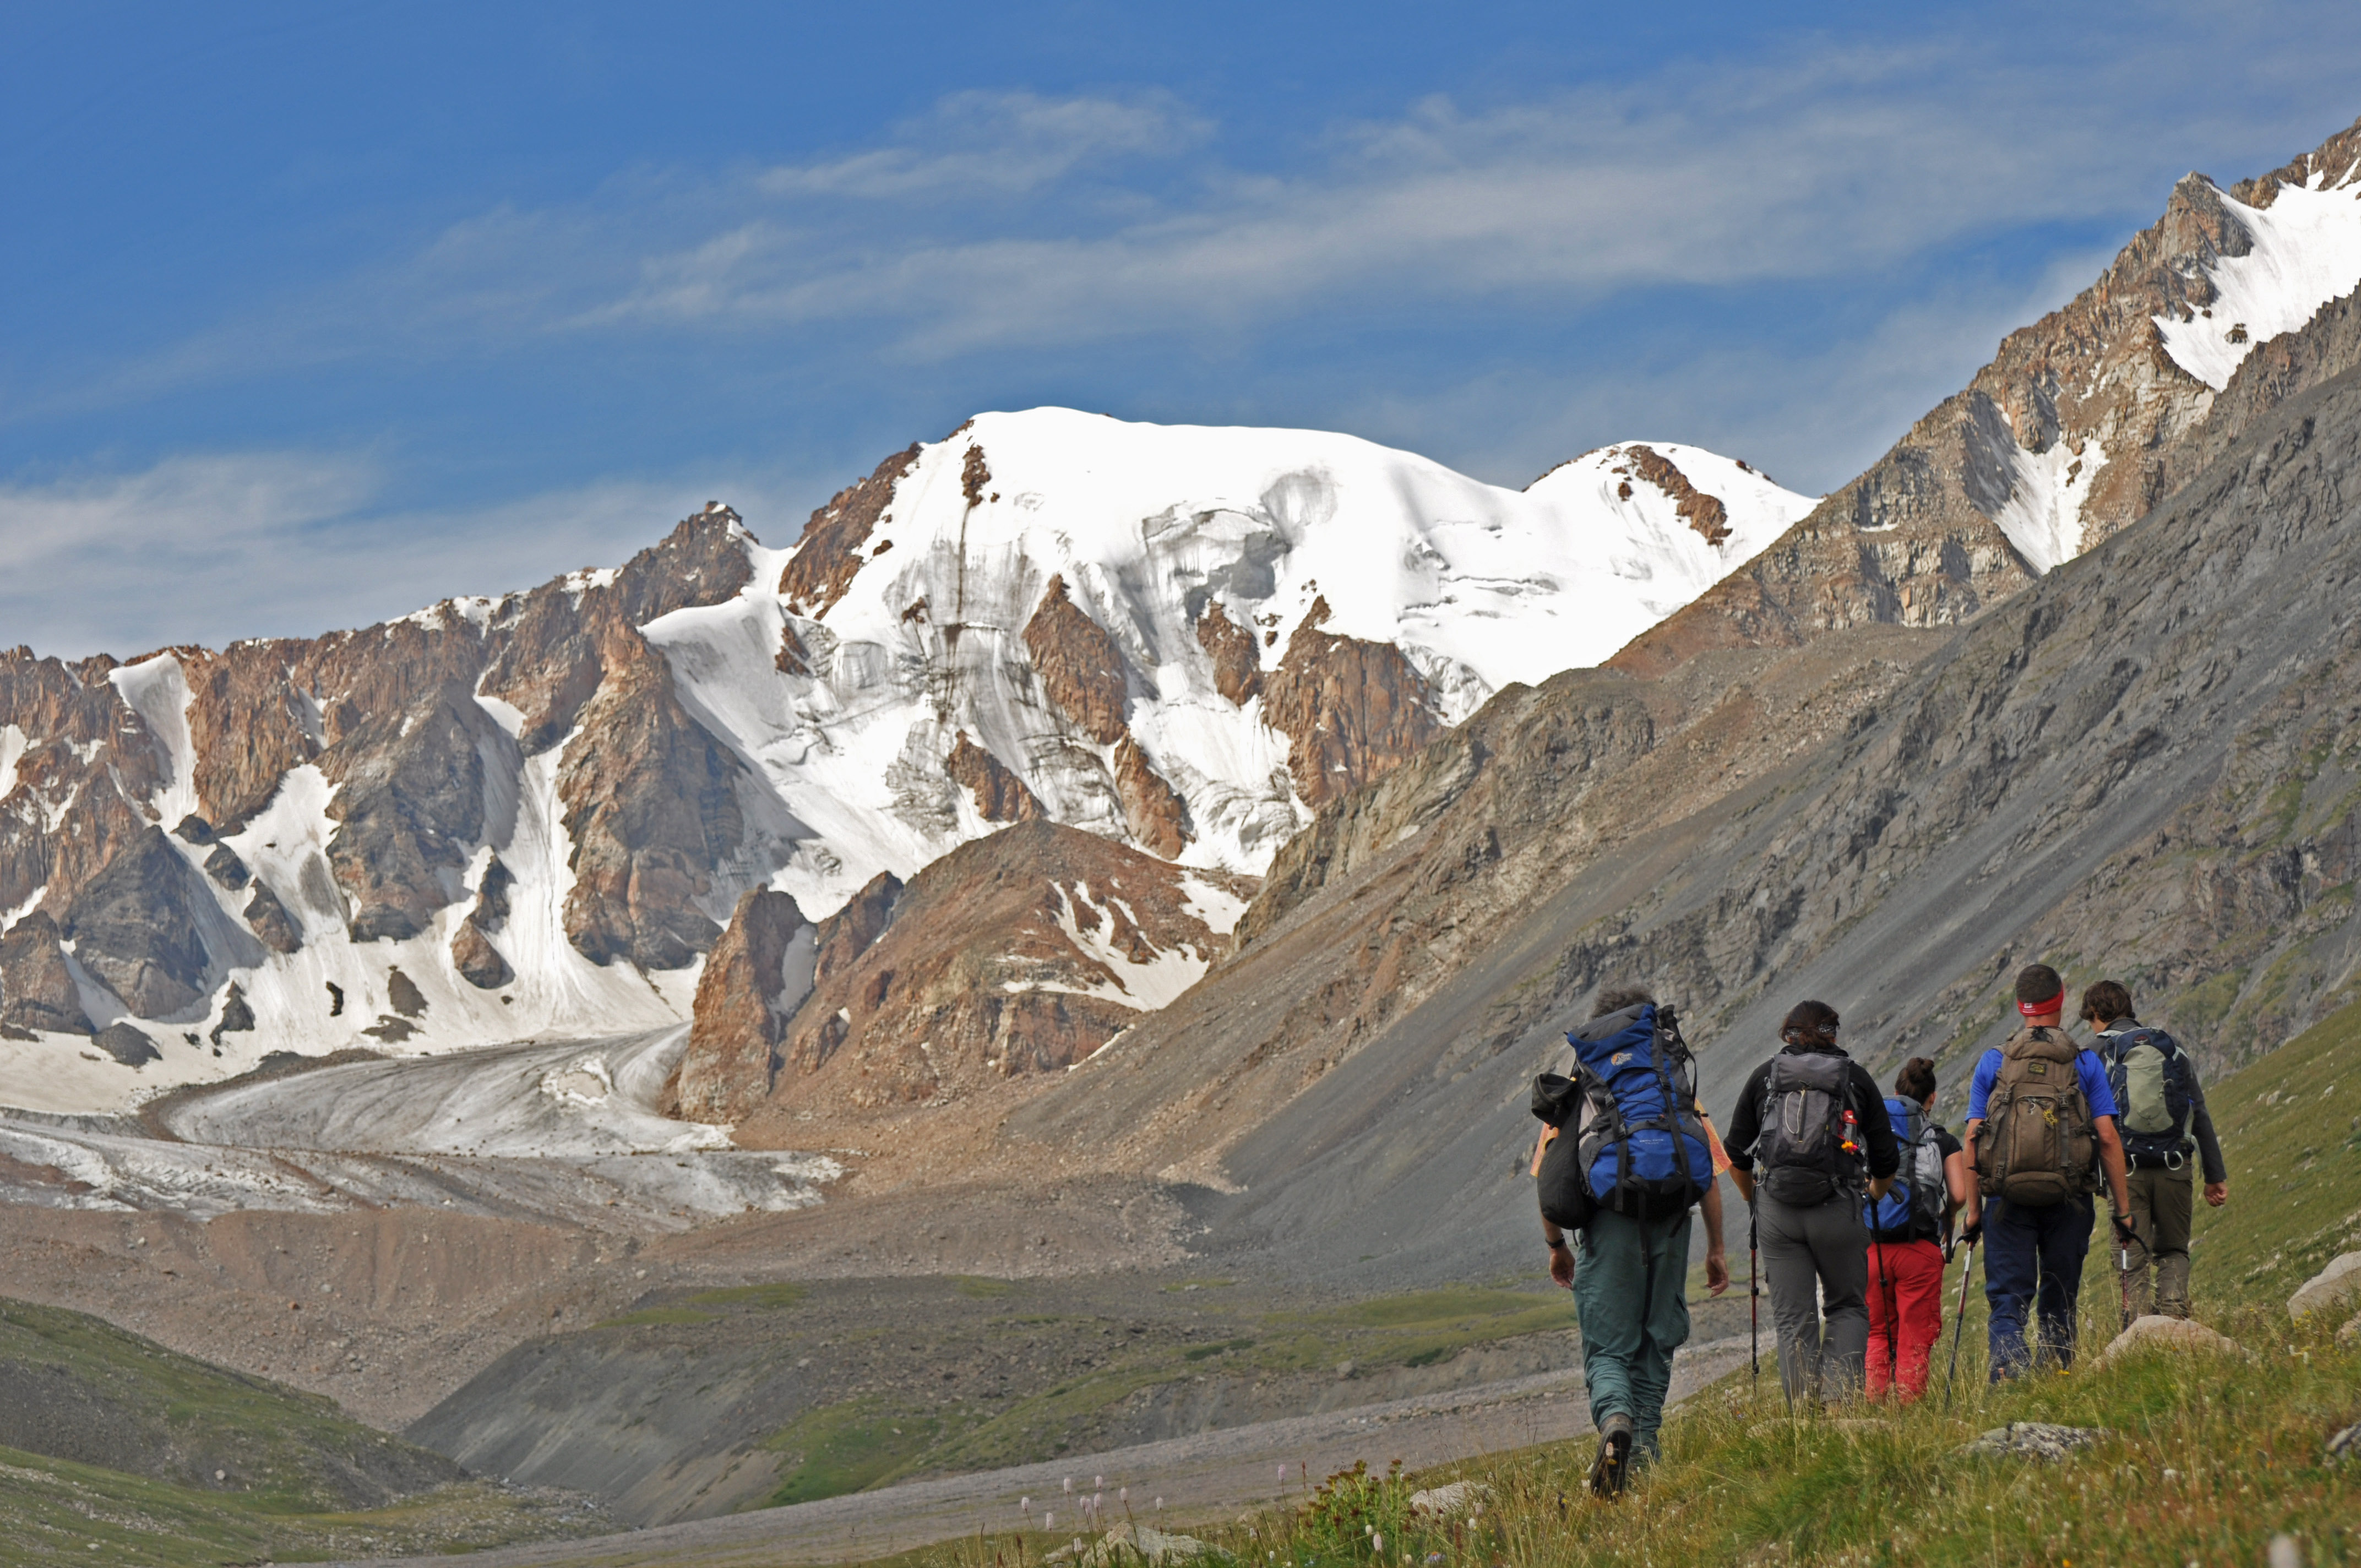 Holy Altai Inspiring Trail, Mongolia, Trekking in the Altai Tavan Bogd